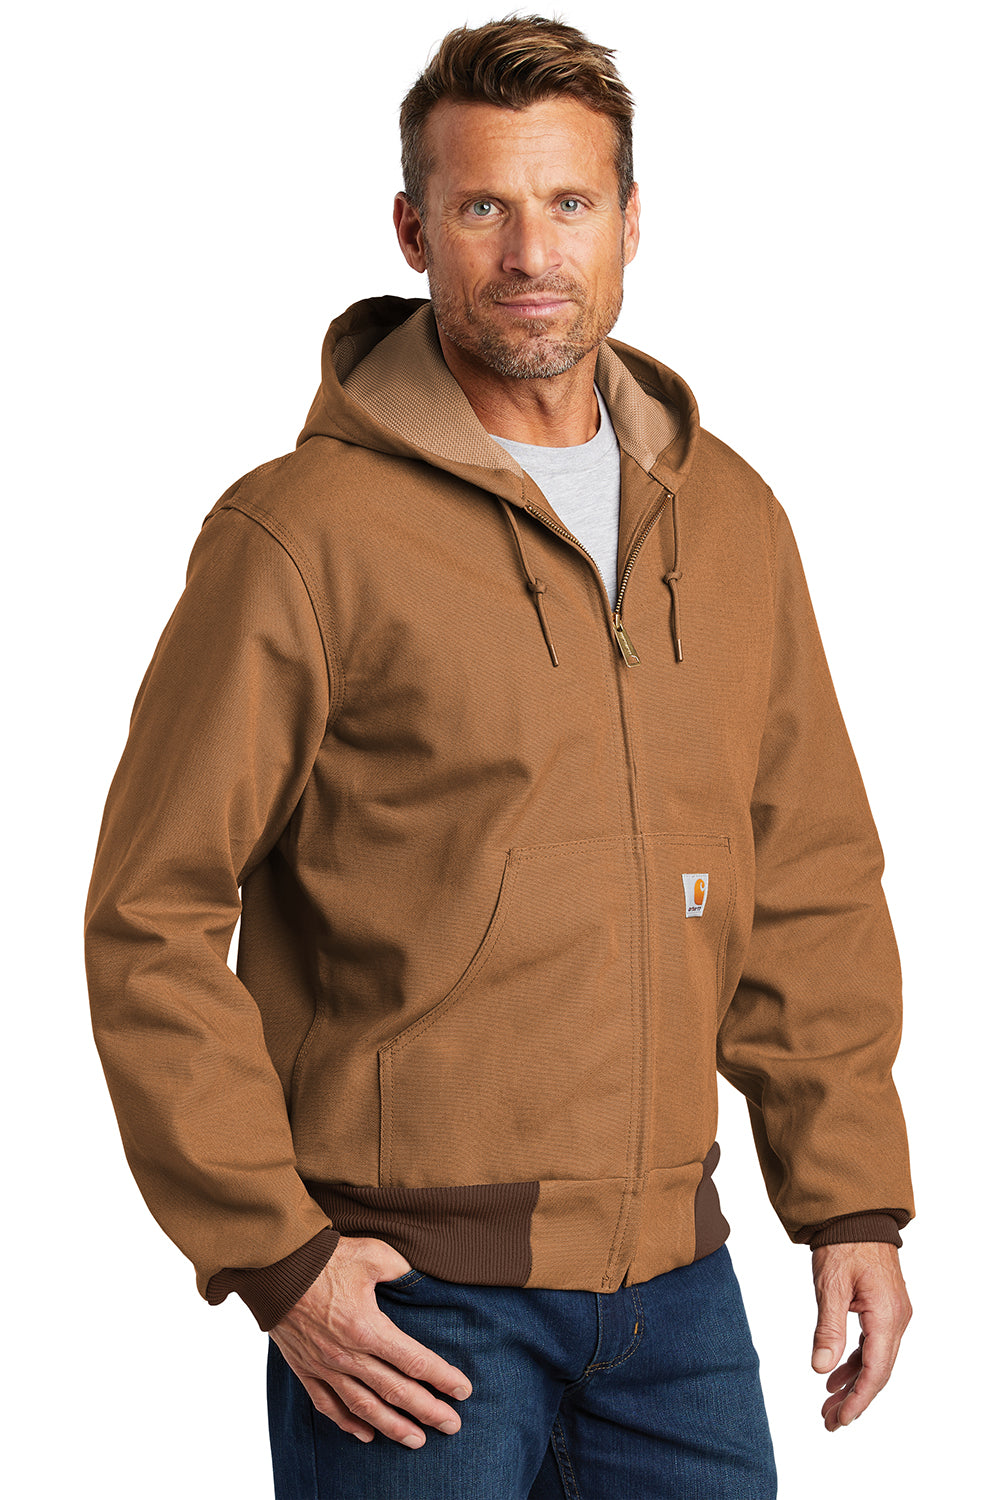 Carhartt CTJ131/CTTJ131 Mens Wind & Water Resistant Duck Cloth Full Zip Hooded Work Jacket Carhartt Brown Model 3Q